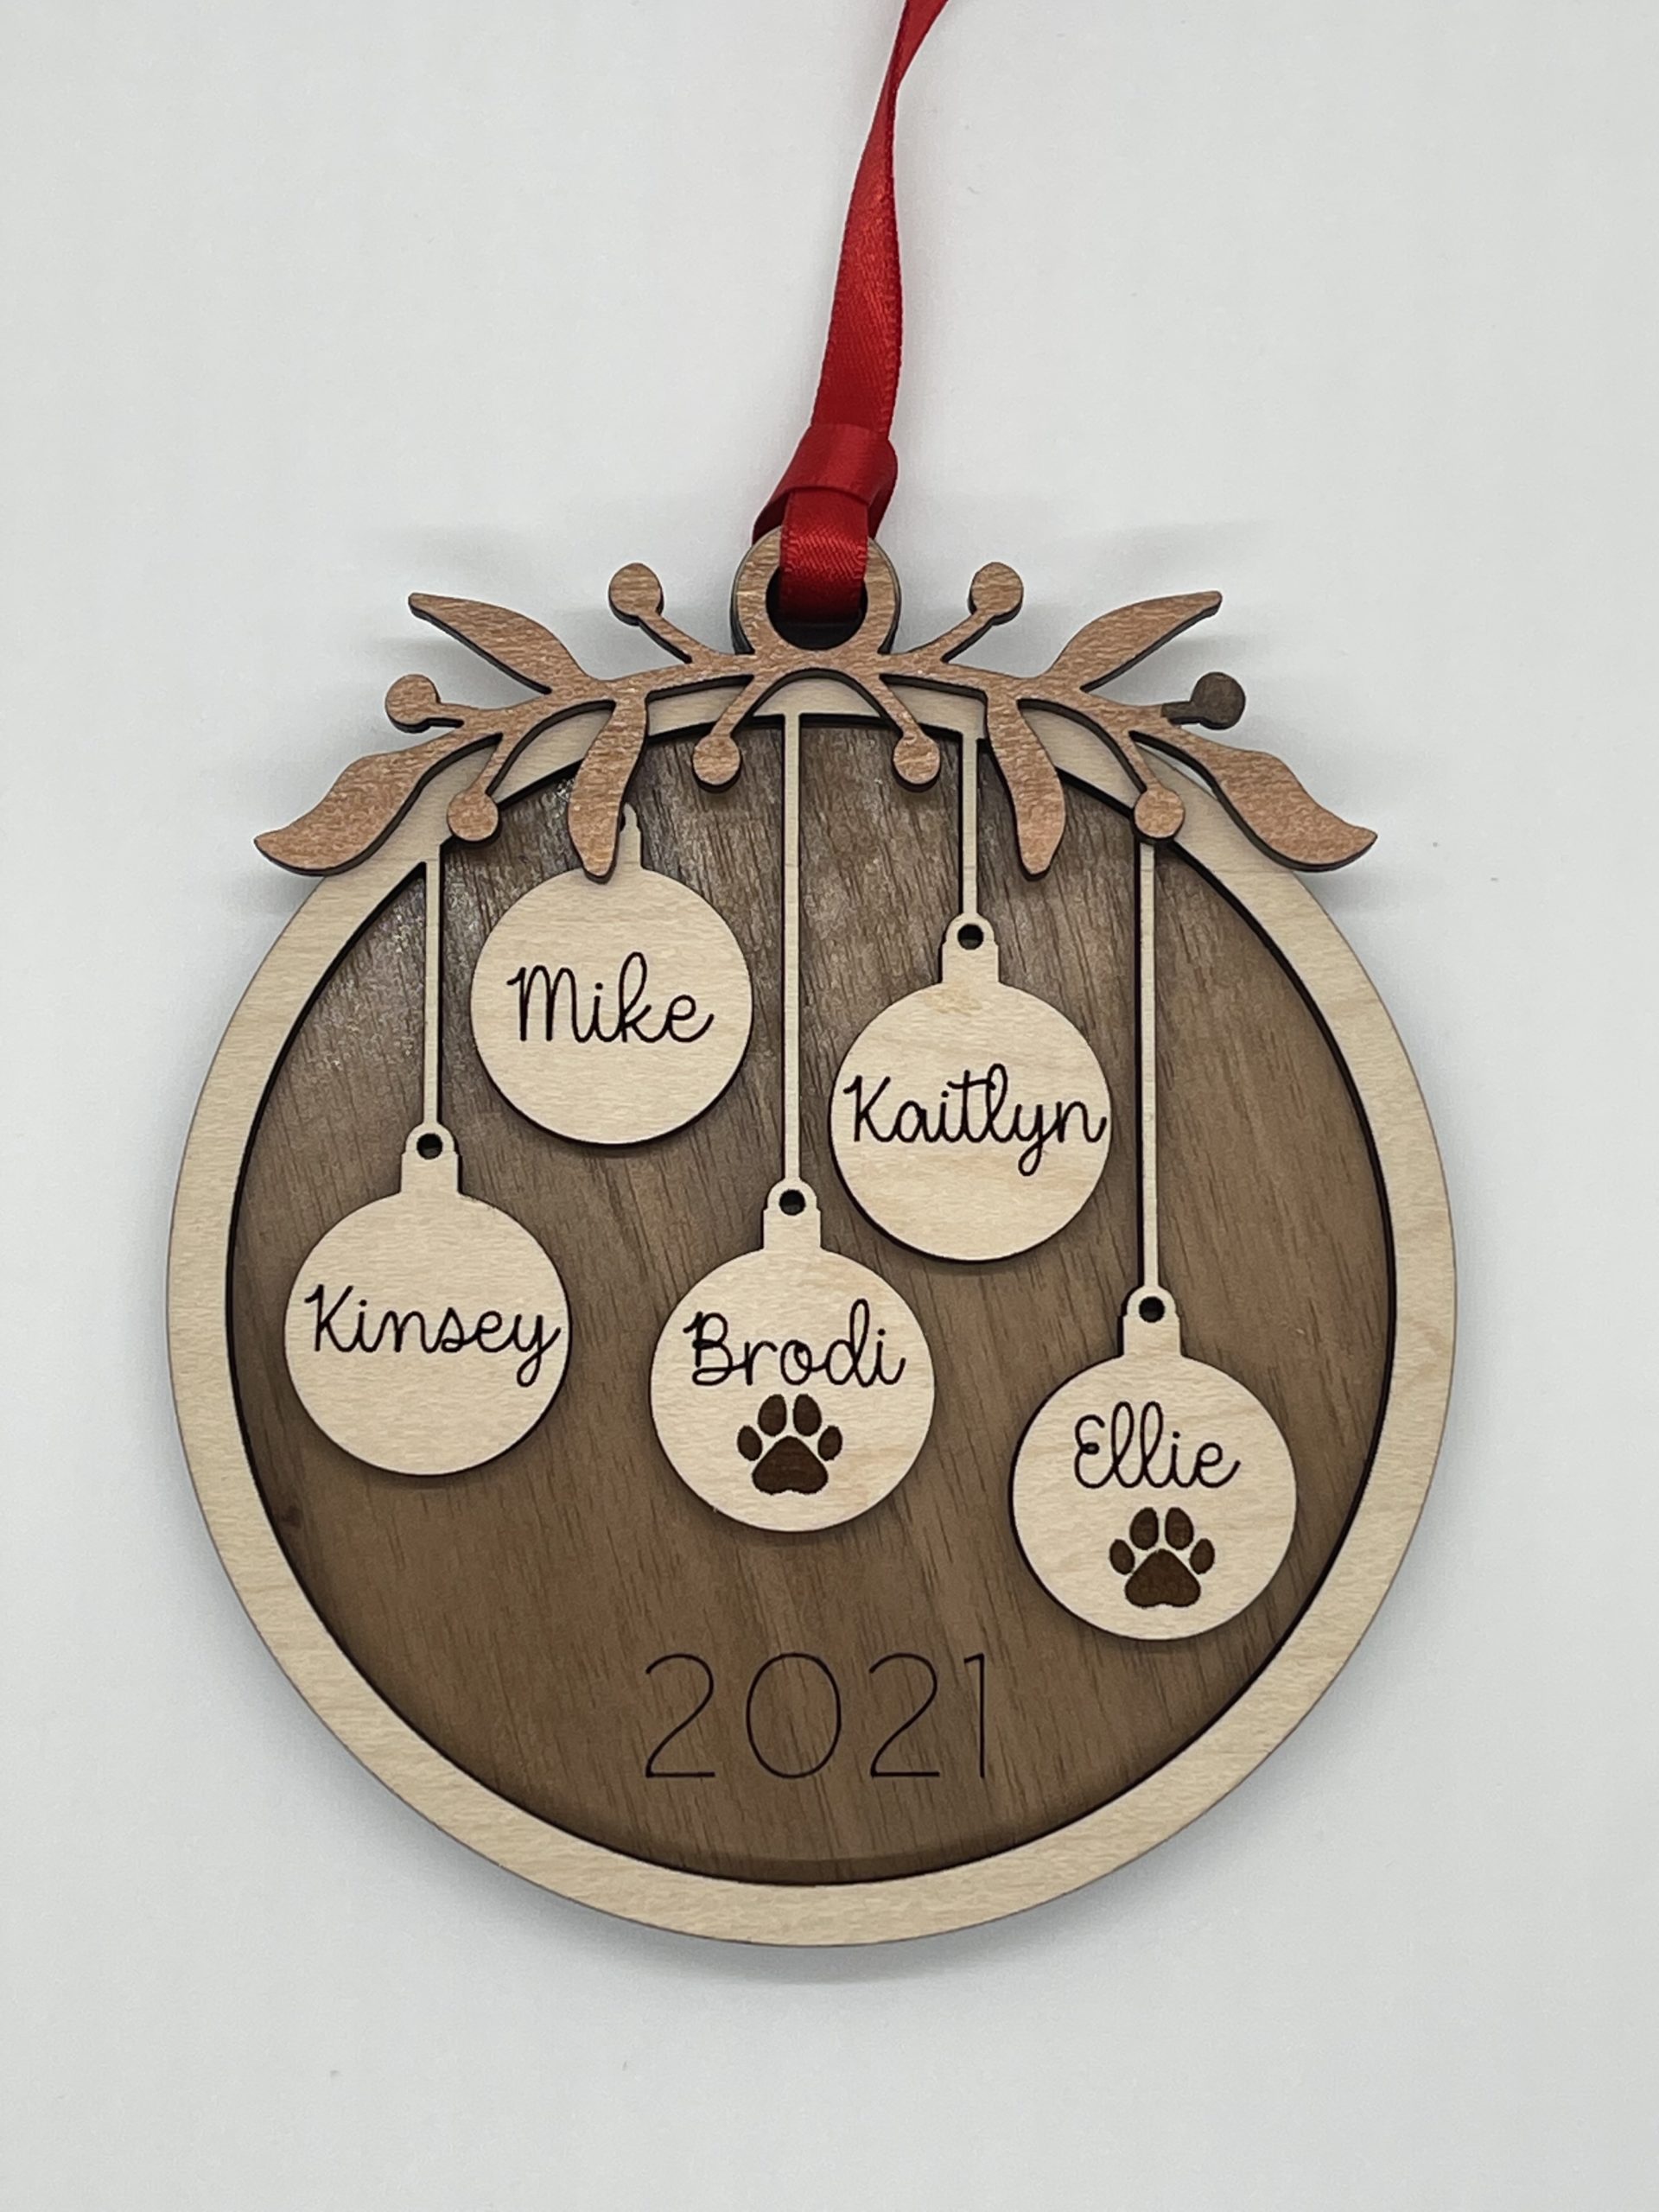 2021 Family Ornament with Mistletoe - Ruth McCabe Design